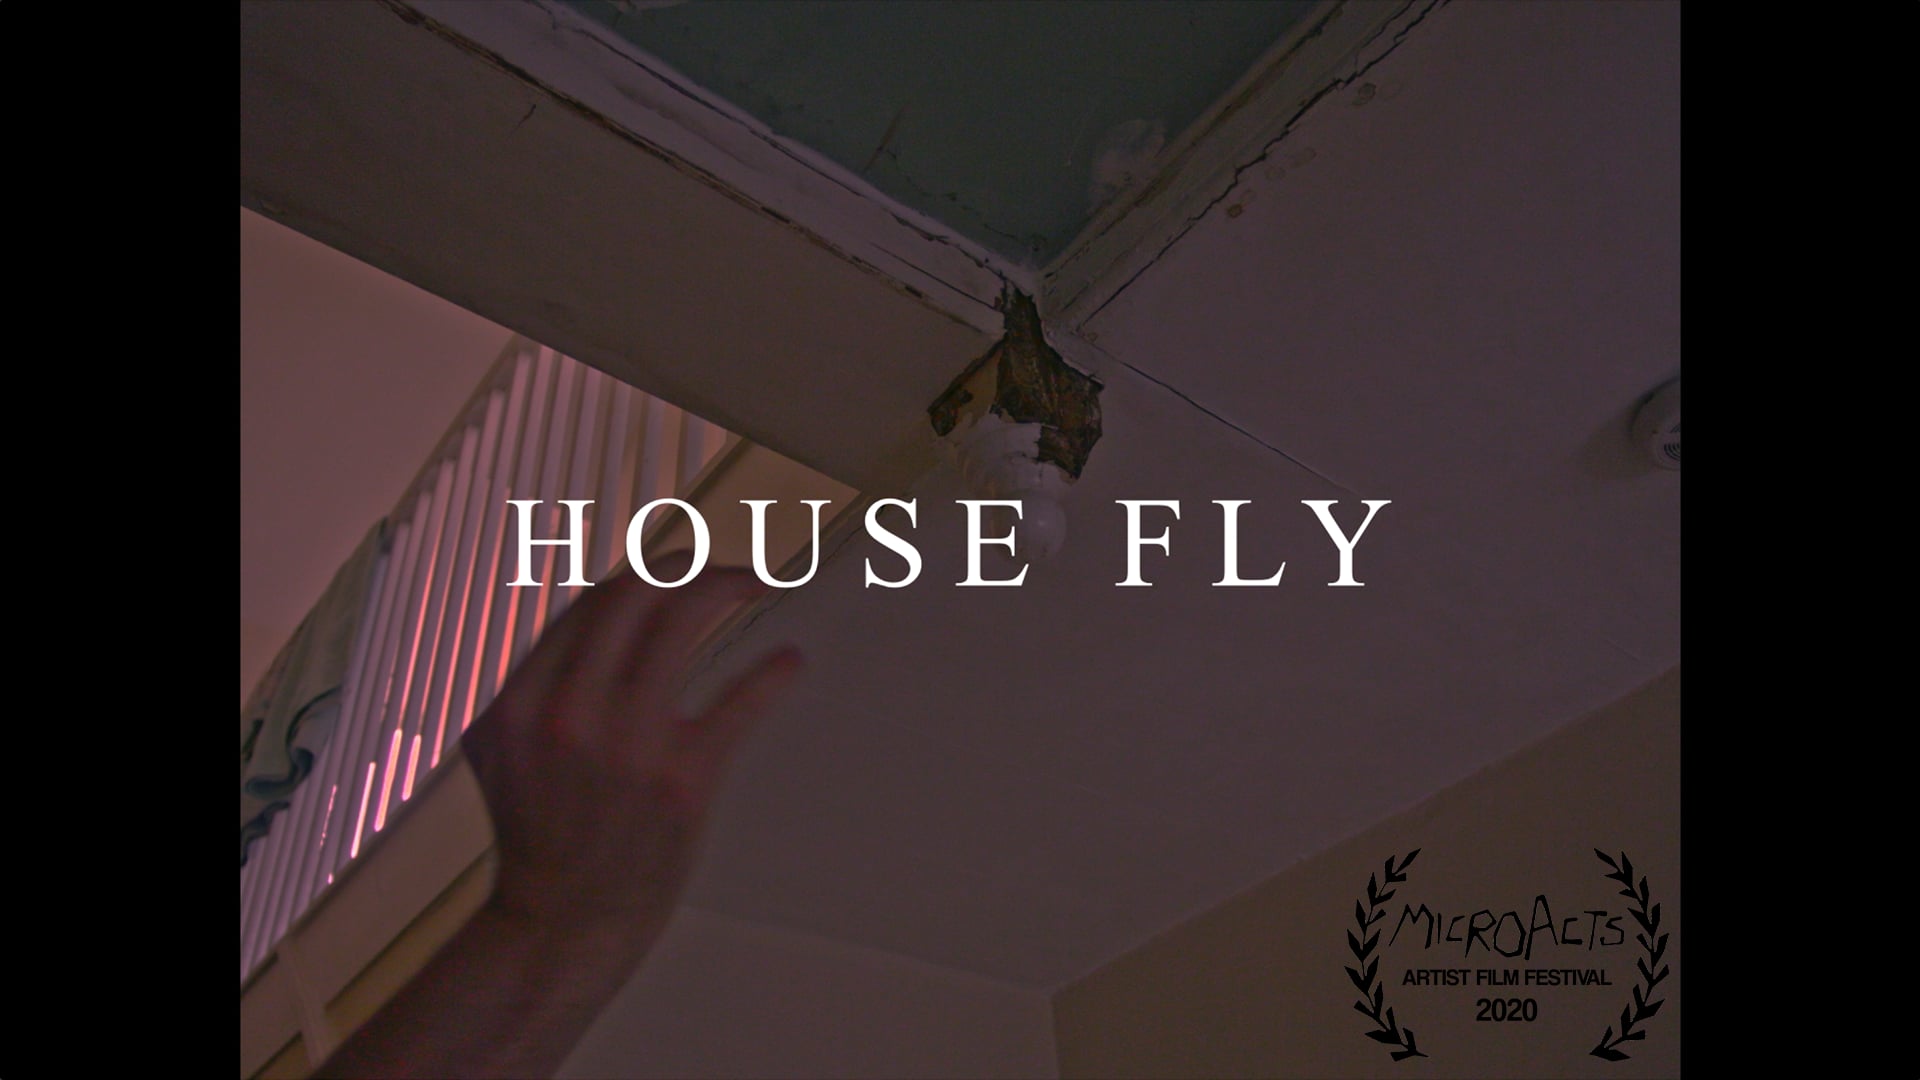 HOUSE FLY